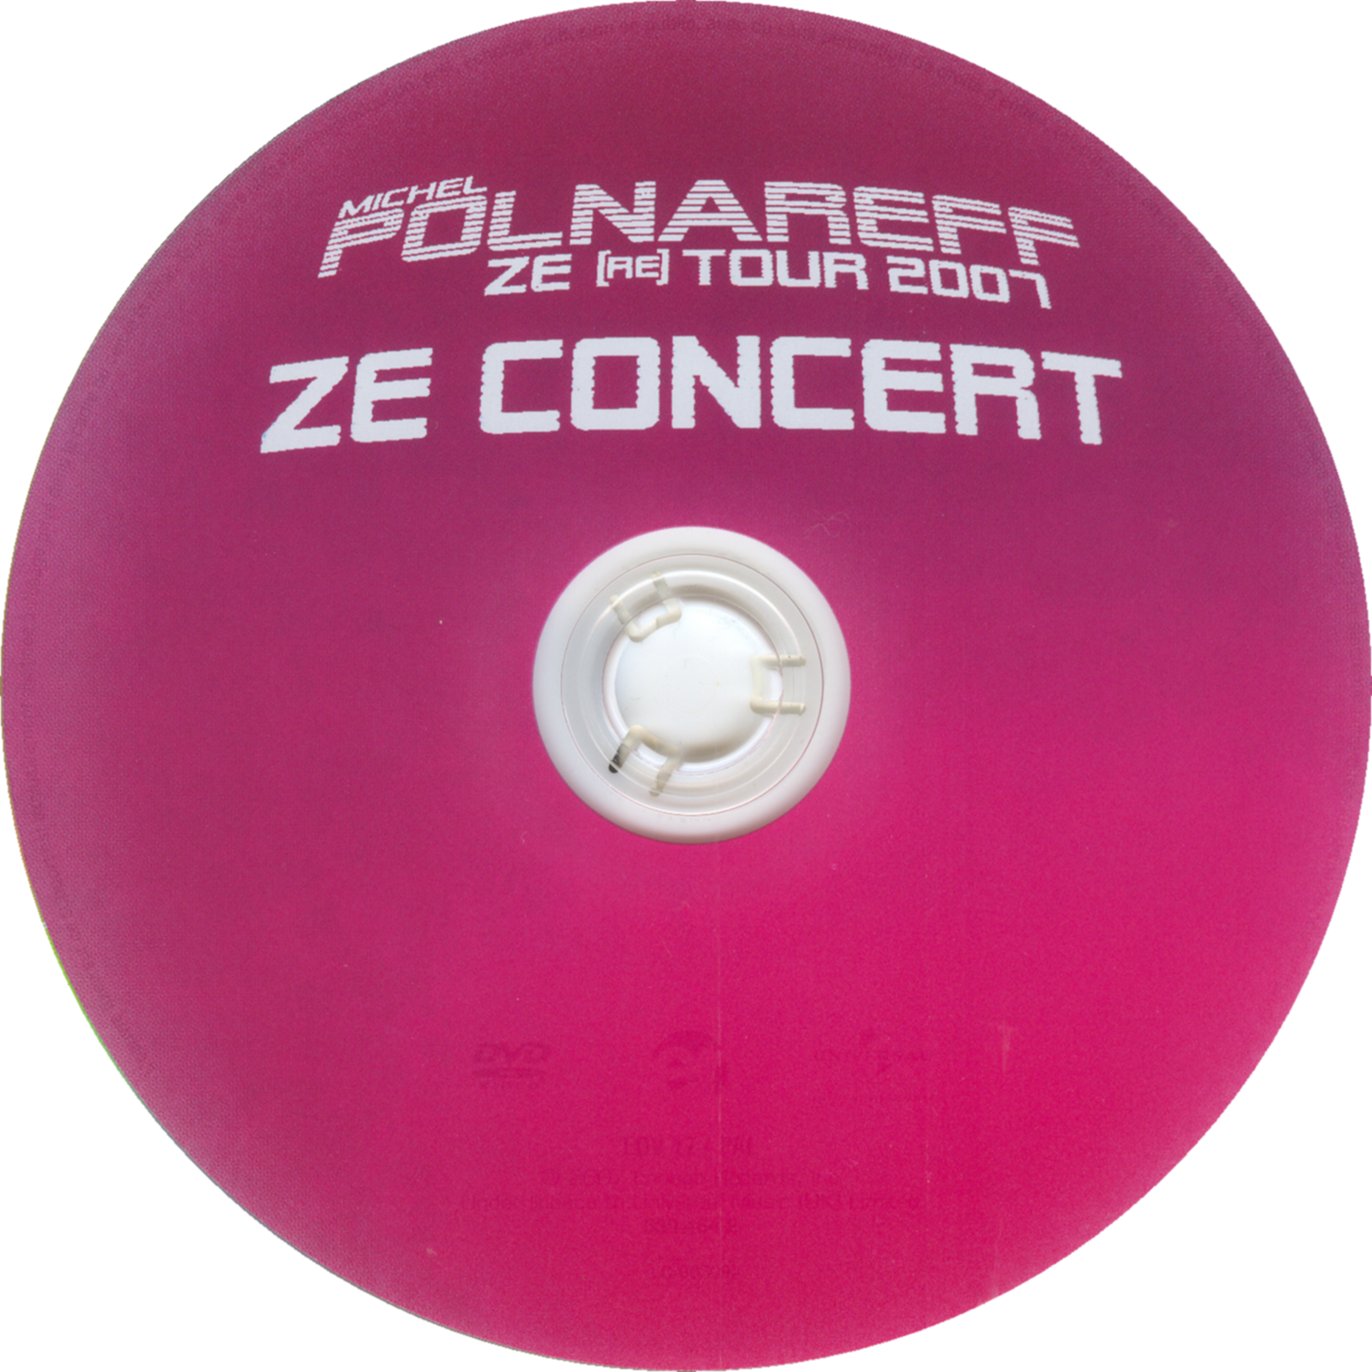 Michel Polnareff Ze (re) tour 2007 DISC 1